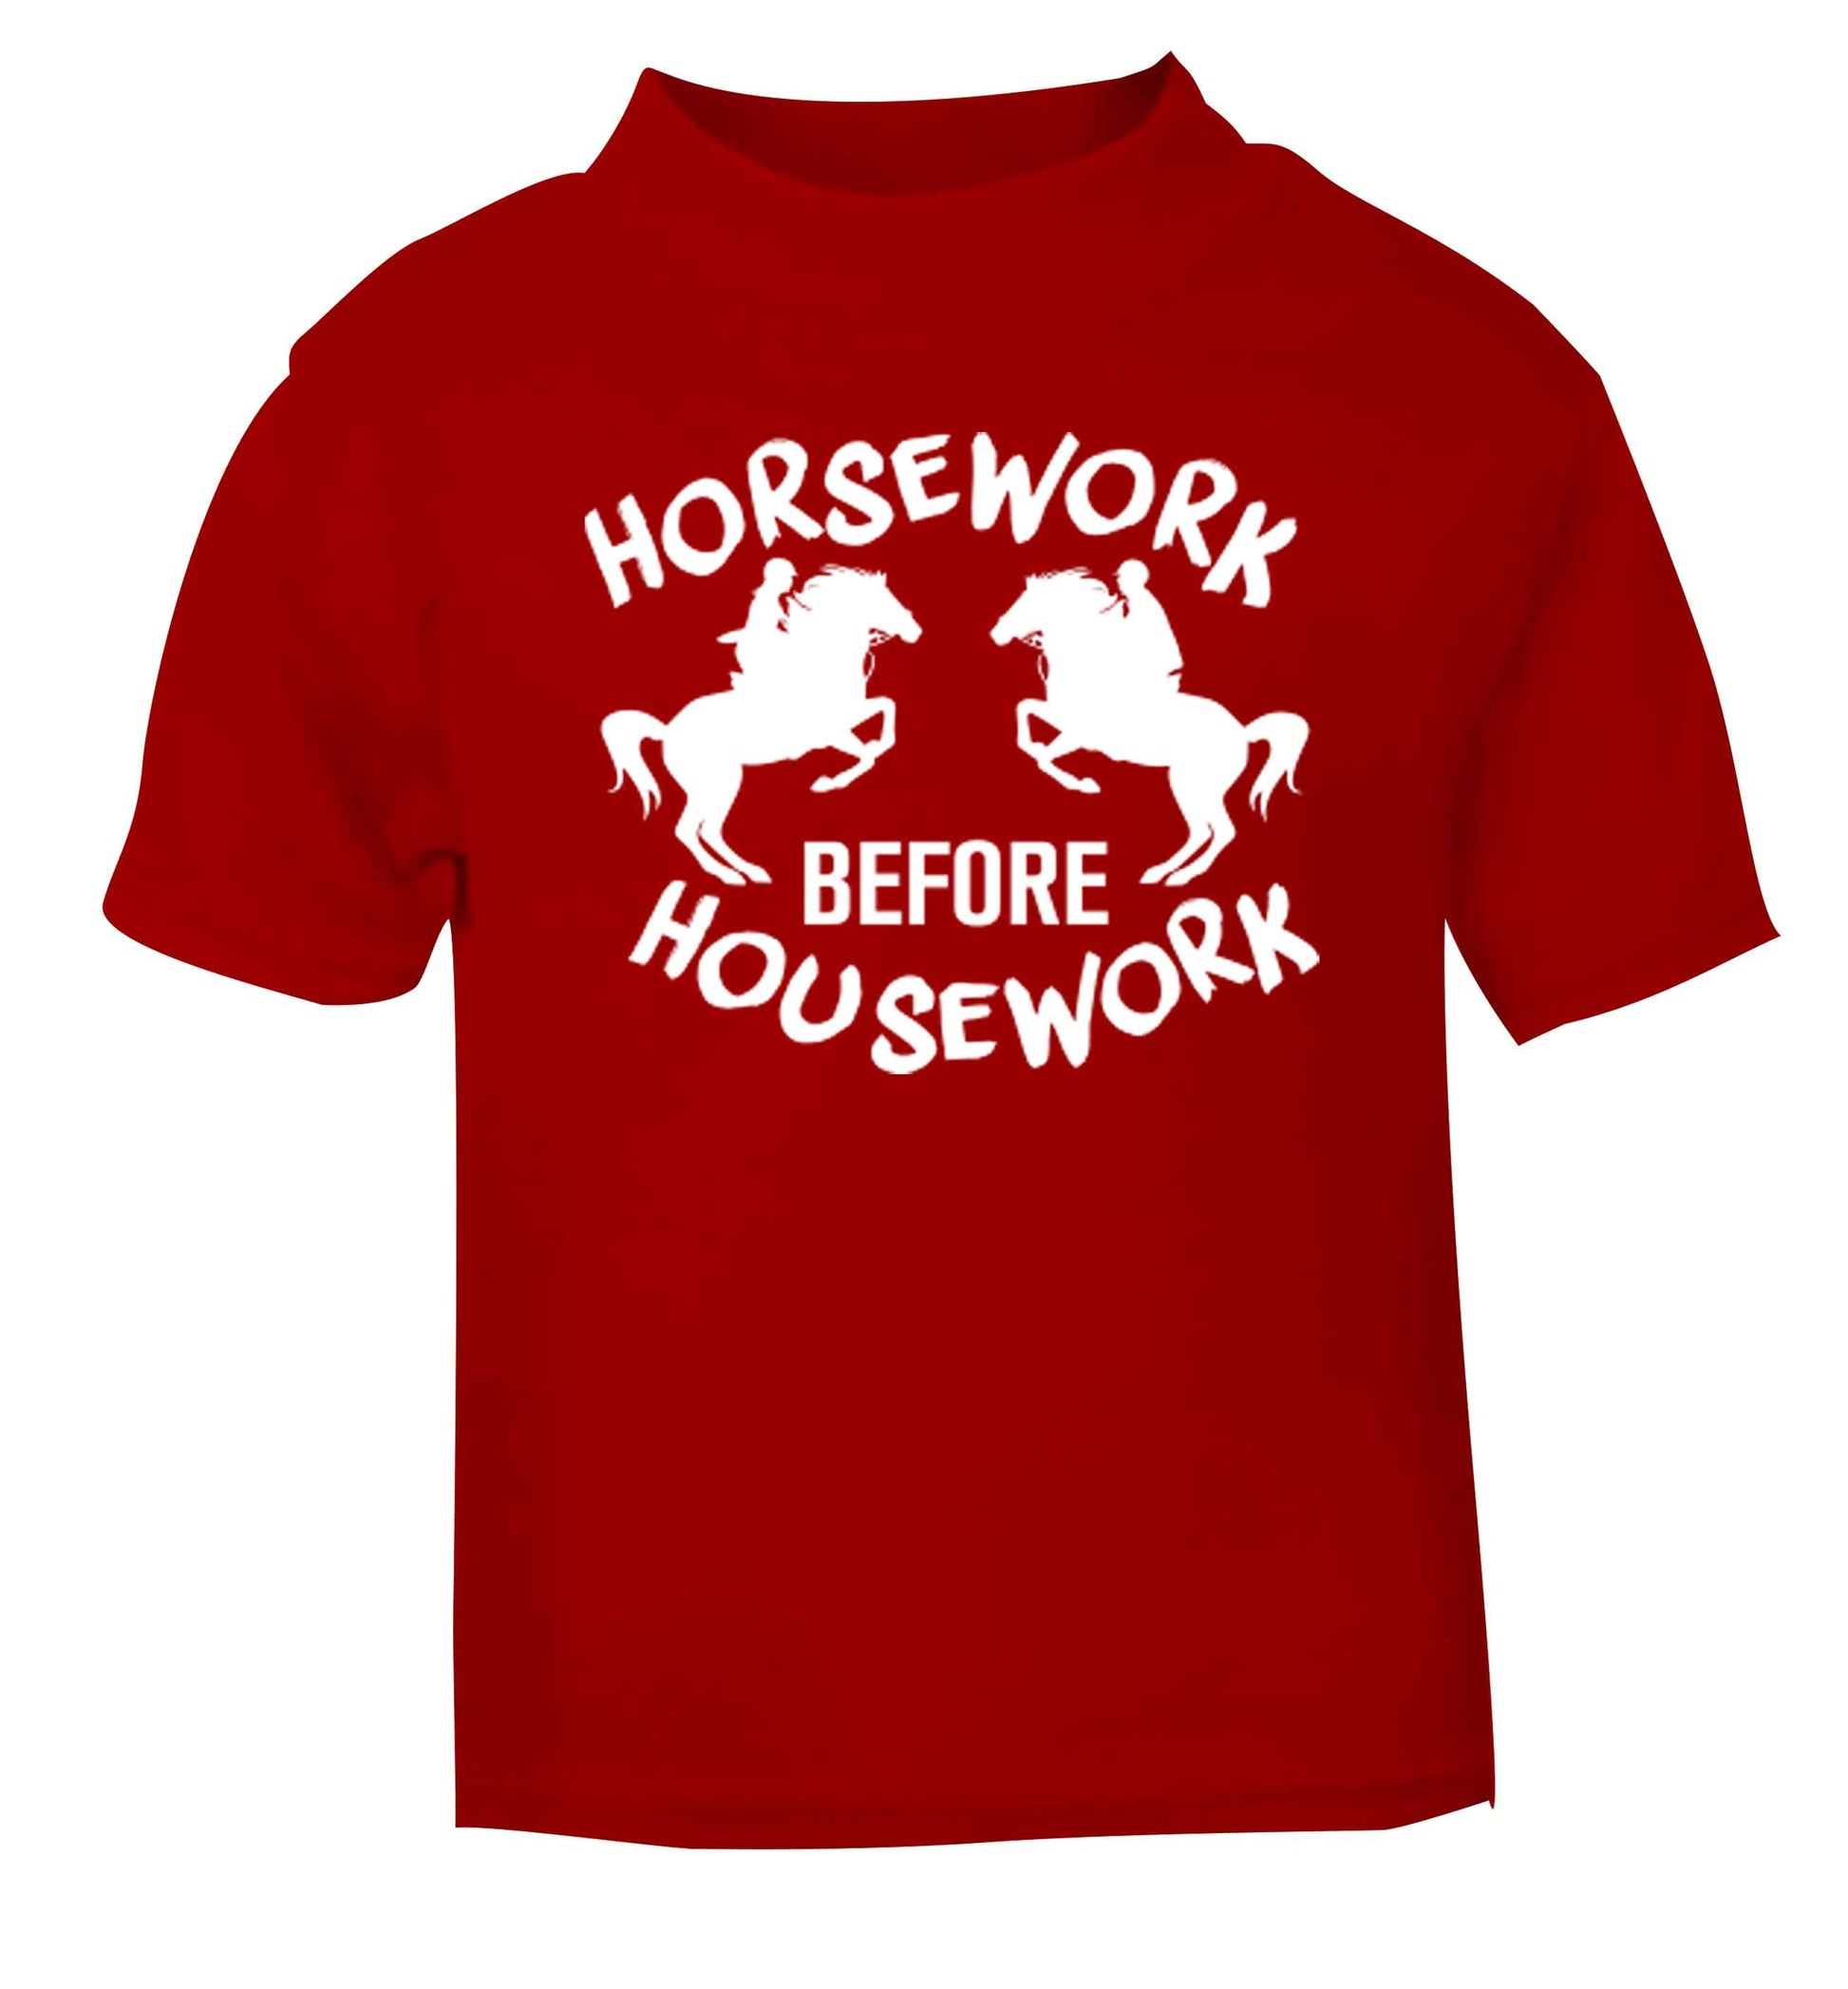 Horsework before housework red baby toddler Tshirt 2 Years